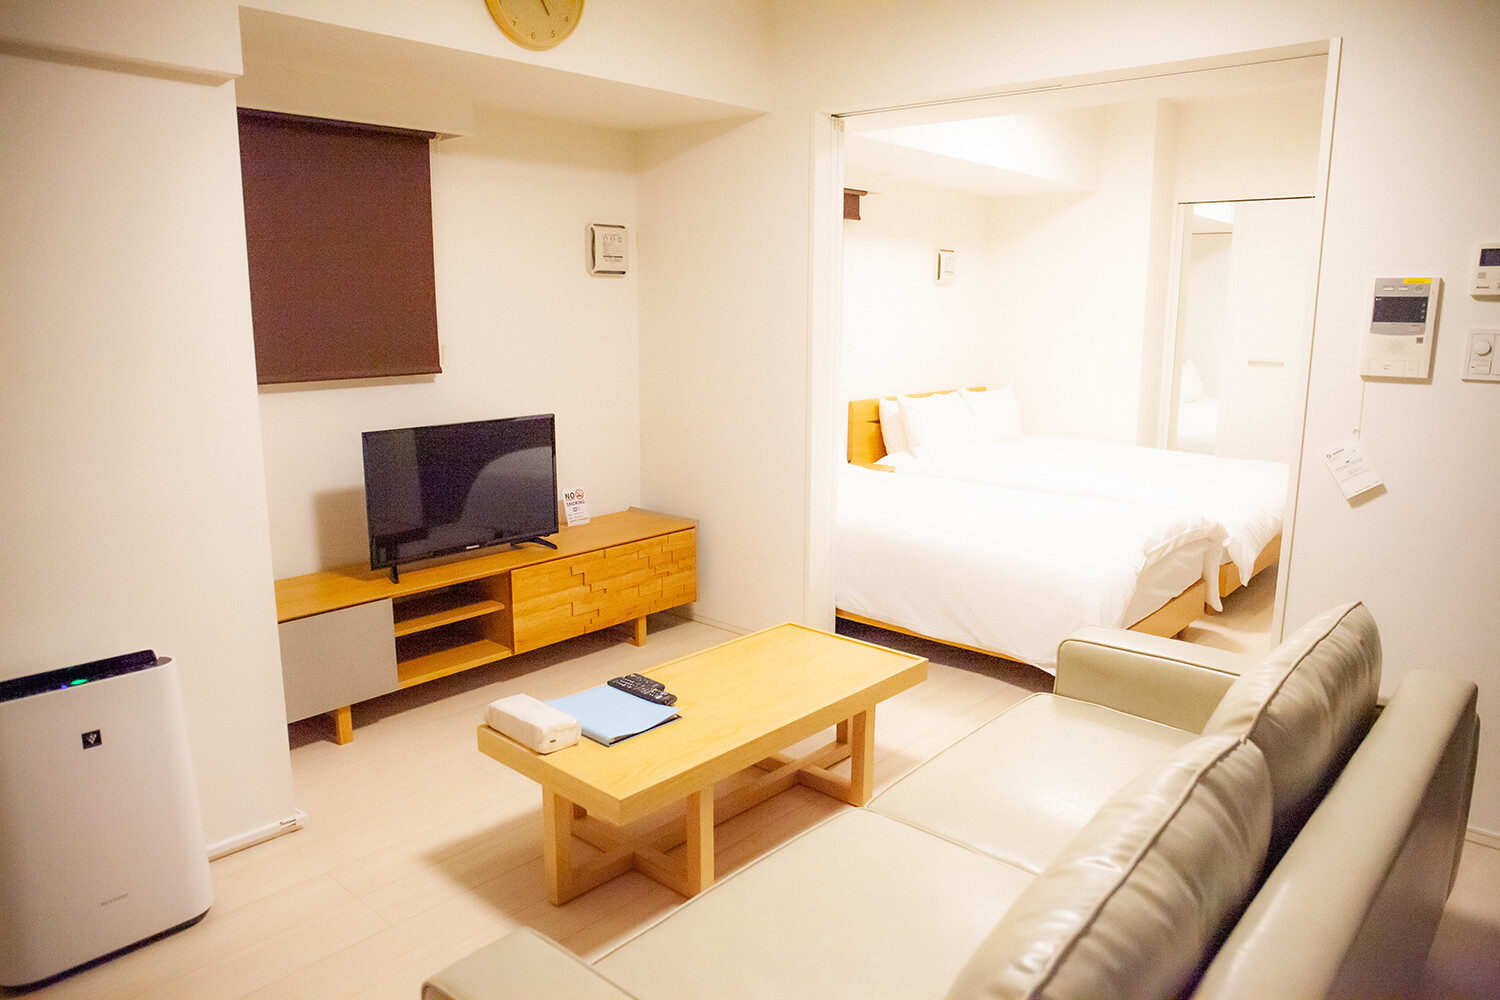 1LDK Short-Term Apartment For Rent in Dogenzaka, Shibuya-ku, Tokyo 